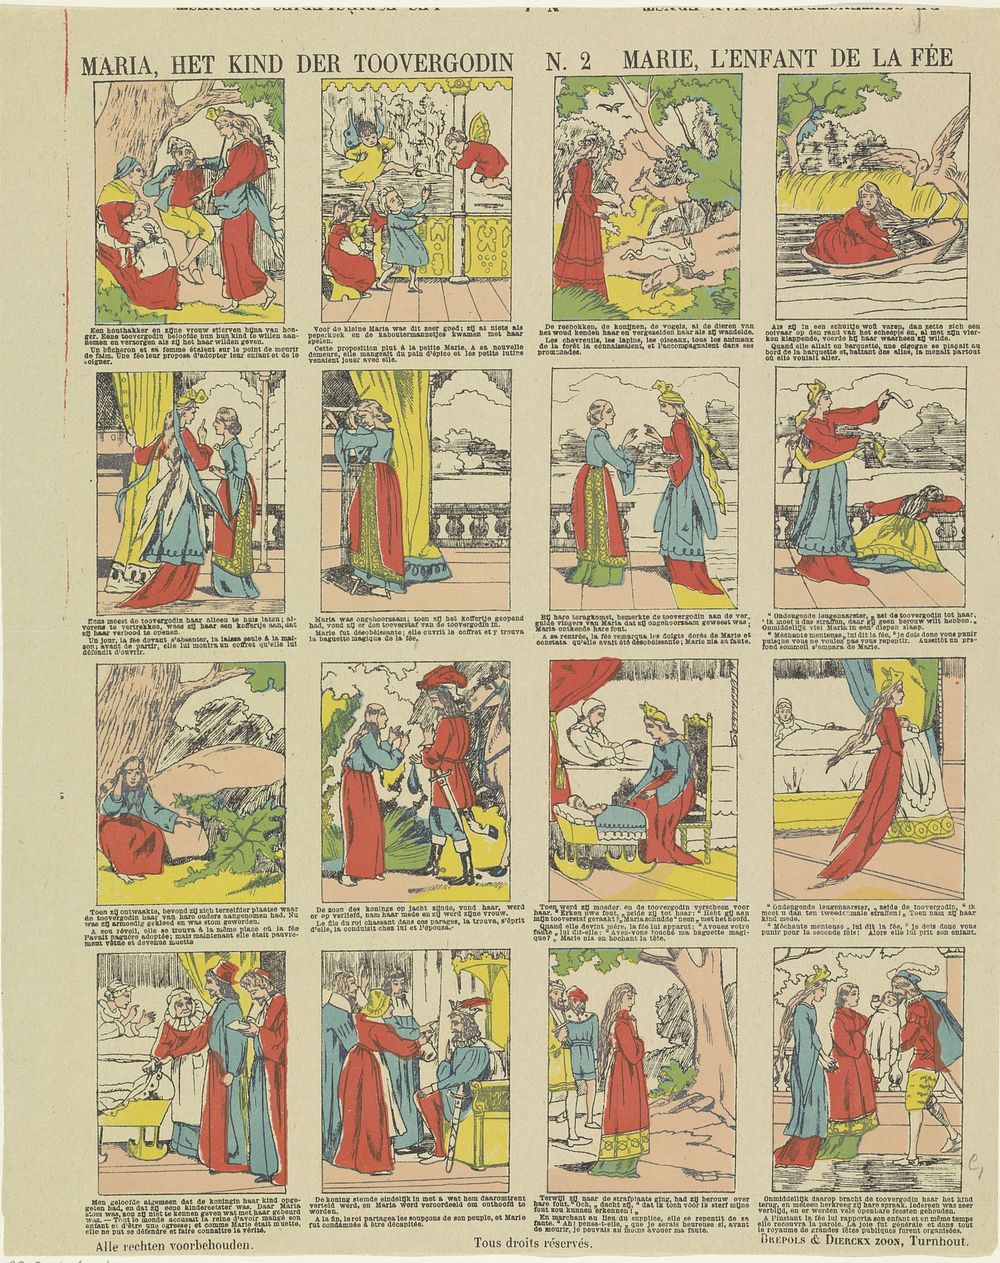 Maria, het kind der toovergodin / Marie, l'enfant de la fée (1833 - 1906) by Brepols and Dierckx zoon and anonymous